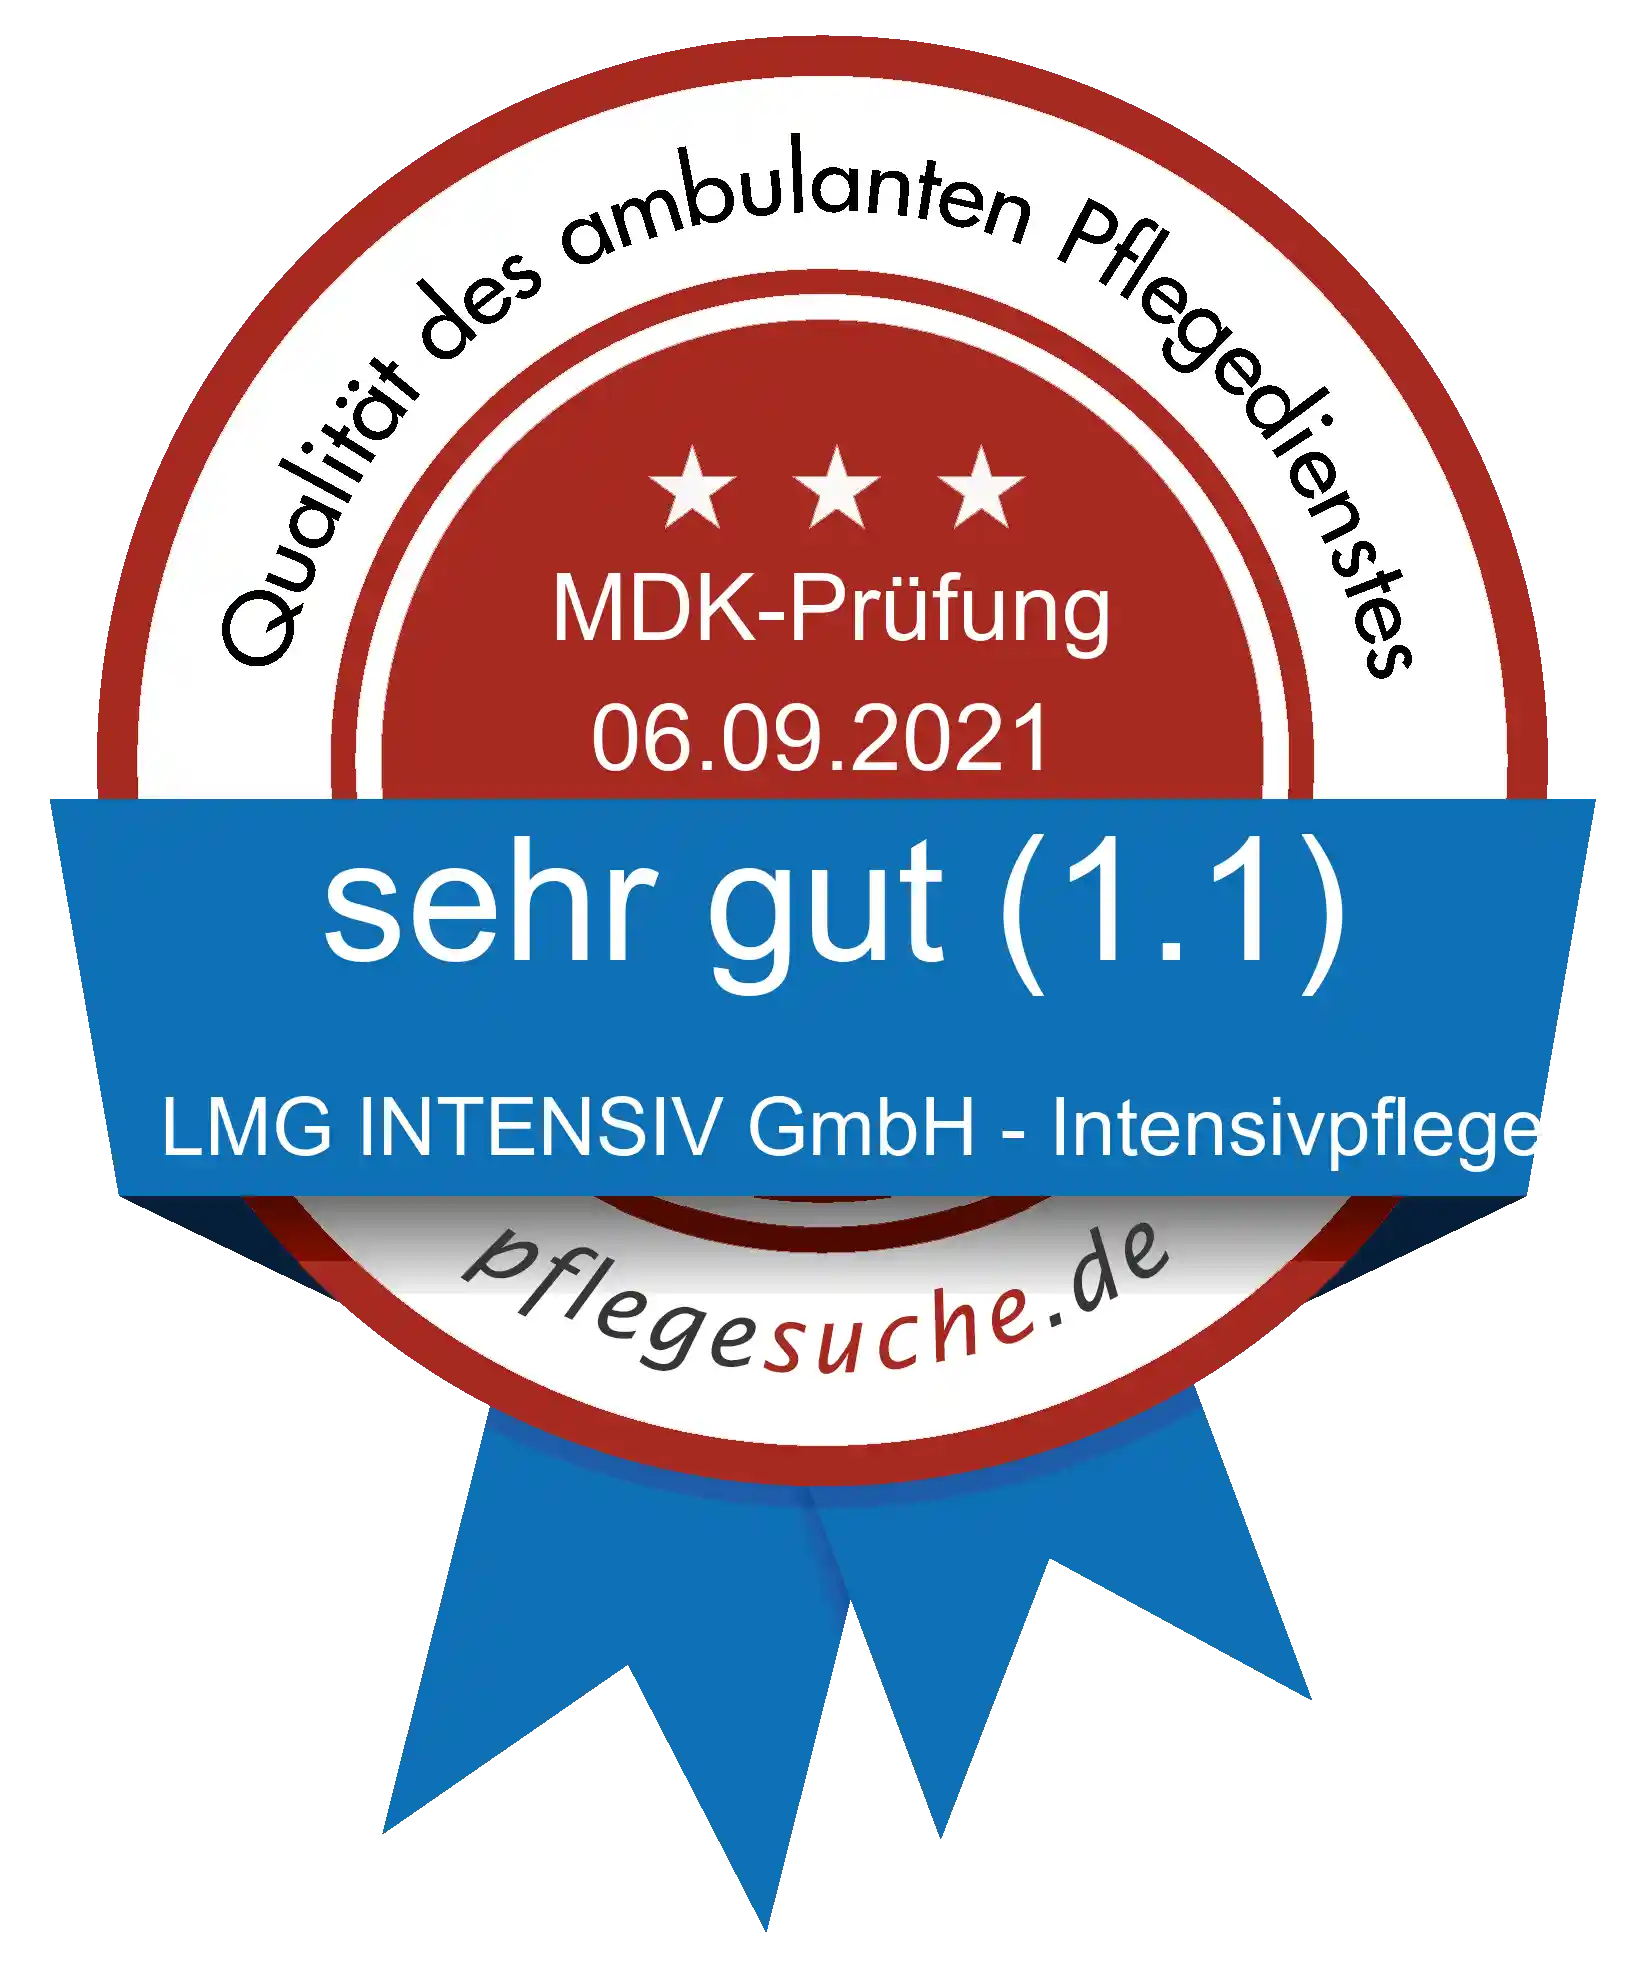 Siegel Benotung: LMG INTENSIV GmbH - Intensivpflege